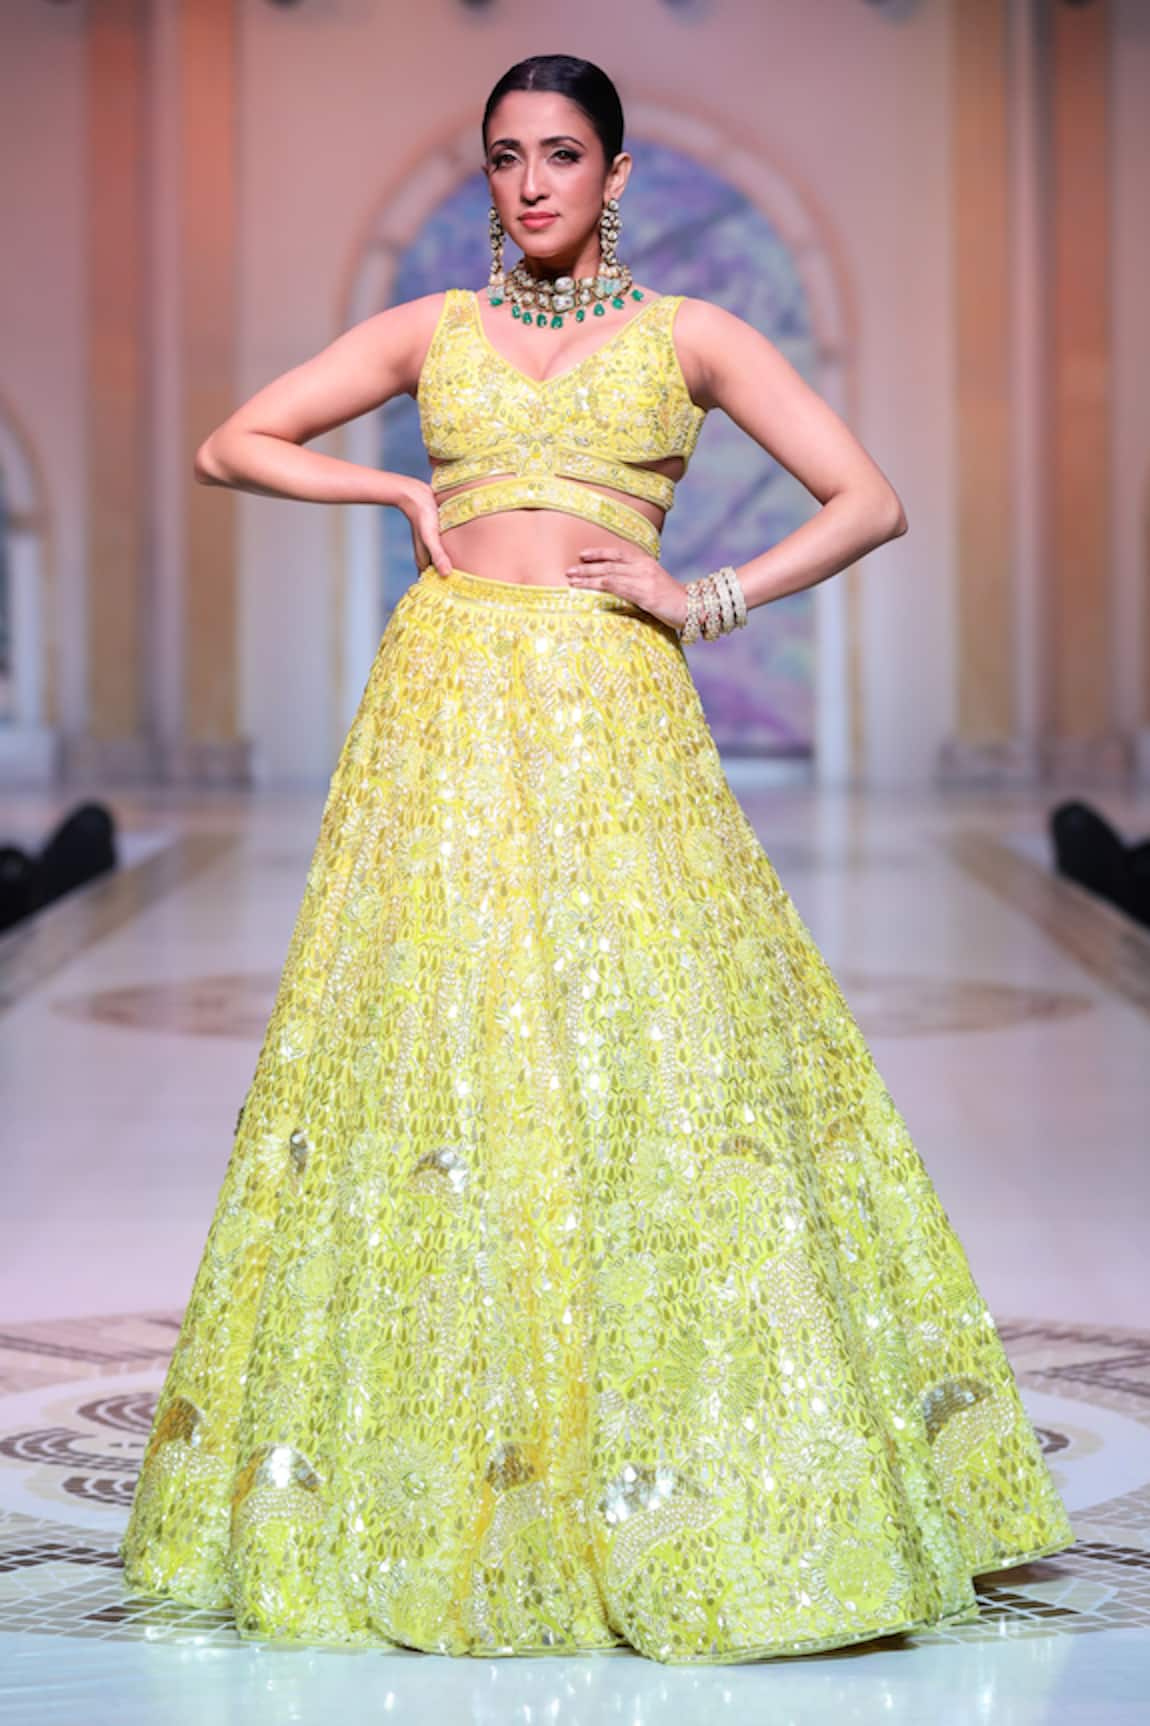 Designer Neeta Lulla | Indian wedding dress, Wedding outfit, Indian fashion